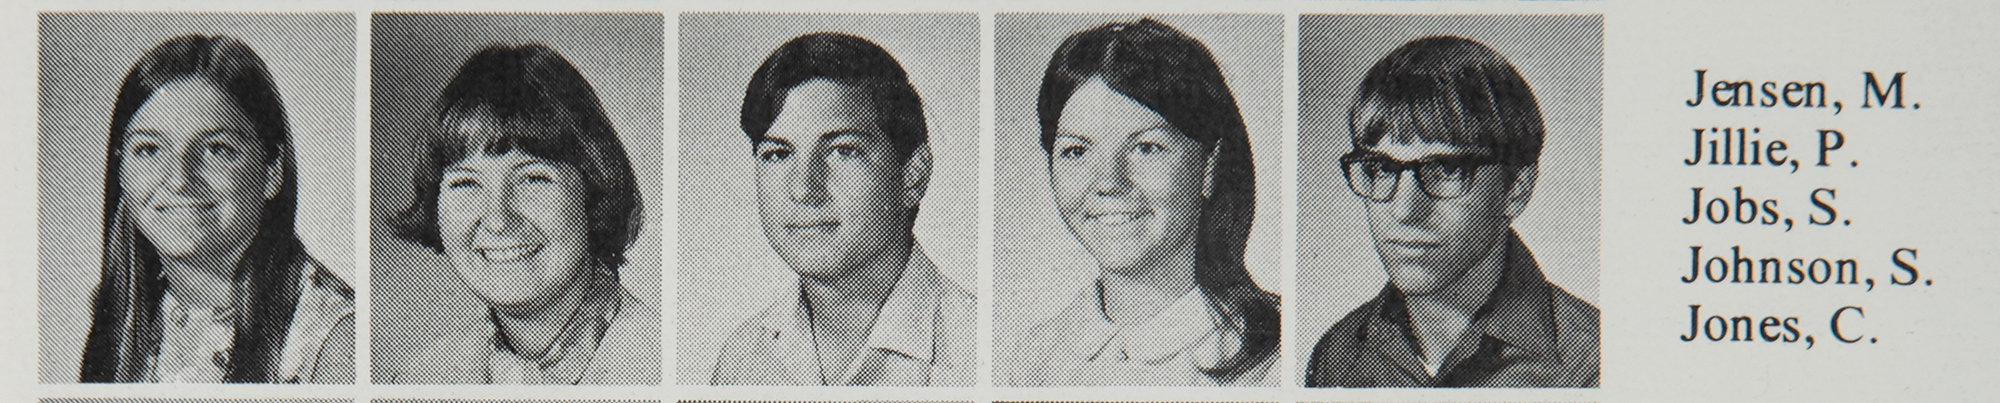 Lot #8018 Steve Jobs Signed 1971 High School Yearbook - Image 3